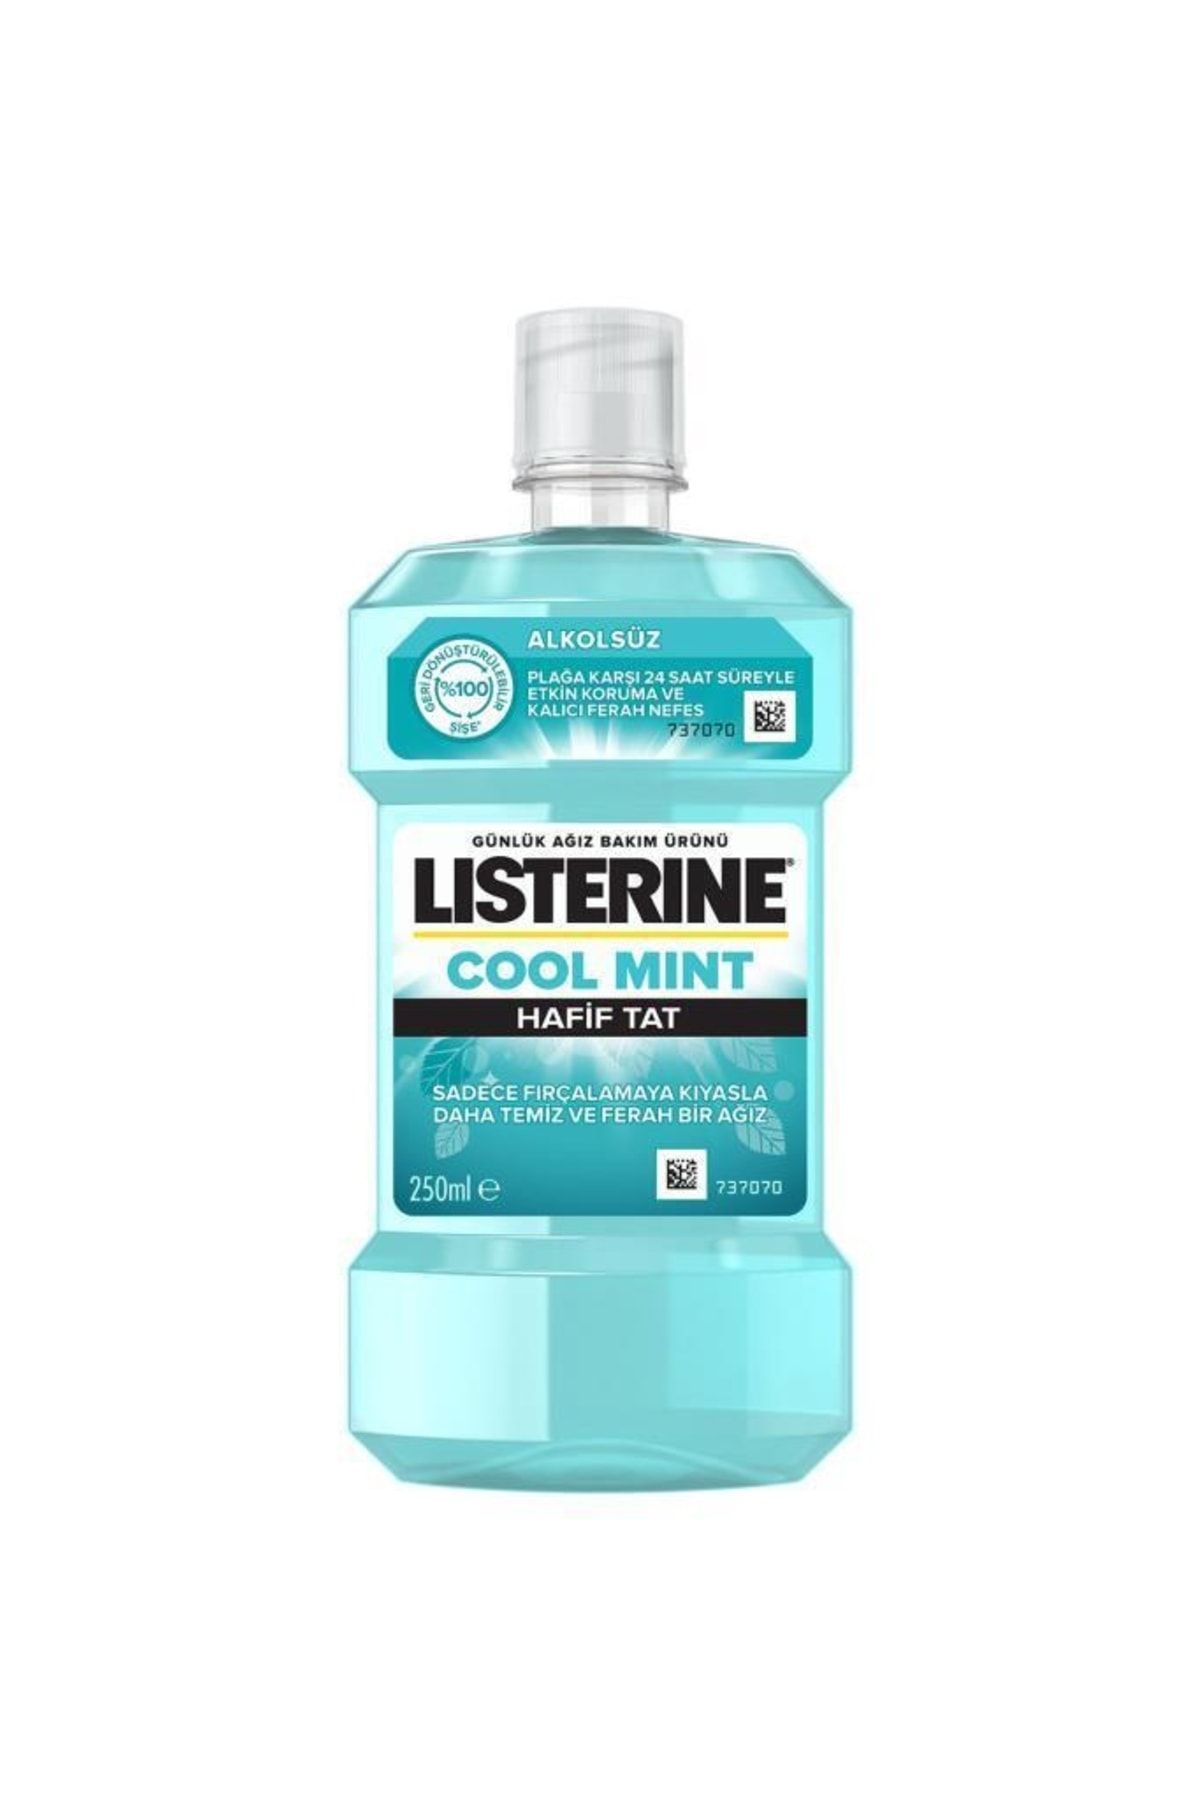 Listerine Cool Mint Hafif Tat Alkolsüz Ağız Bakım Suyu 250ml